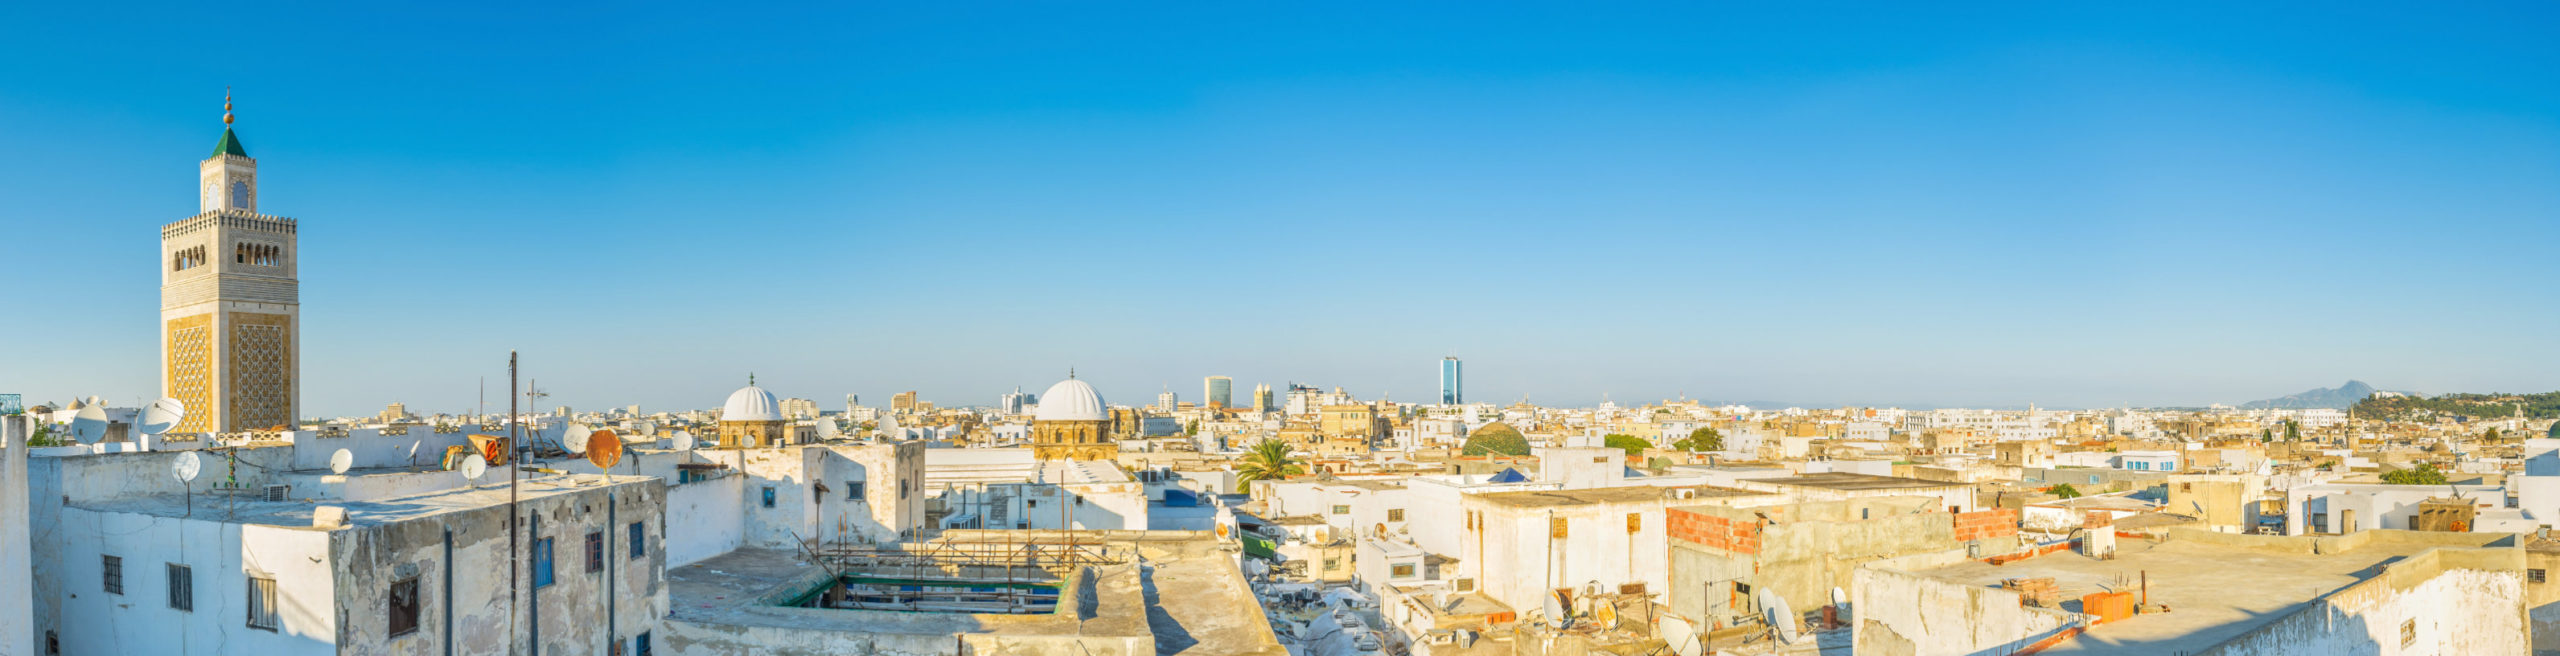 Vue panoramique de la ville de Tunis, Tunisie